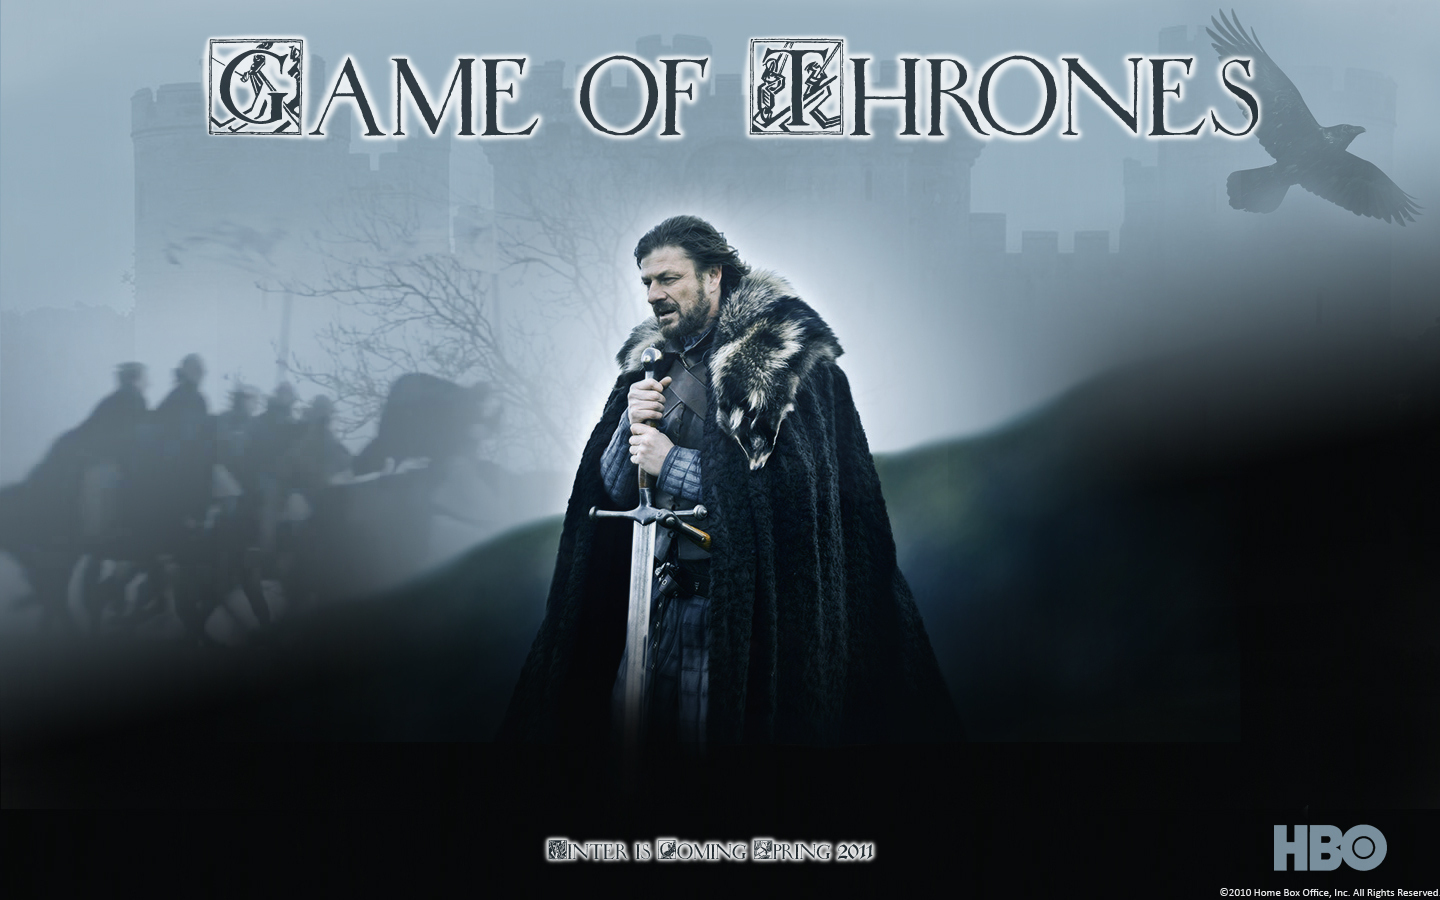 http://3.bp.blogspot.com/-WraneX9Nxqo/TfuJQce0mQI/AAAAAAAAAKc/VeLKJ9KwZvo/s1600/Game-of-Thrones-game-of-thrones-17631244-1440-900.jpg